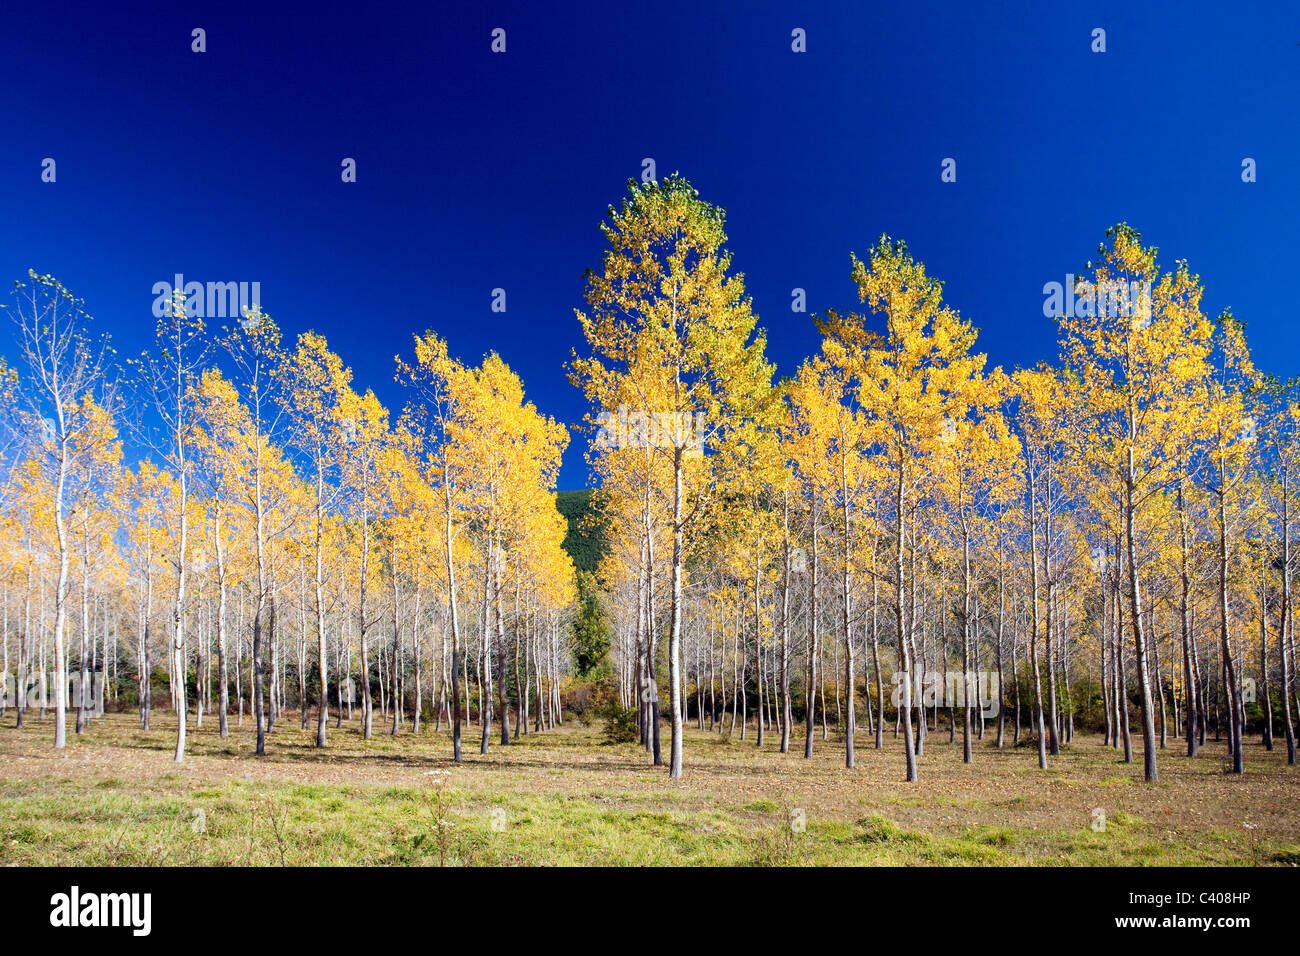 Spain, Europe, Aragon, Huesca, Pyrenees, wood, forest, birches, autumn, trees Stock Photo